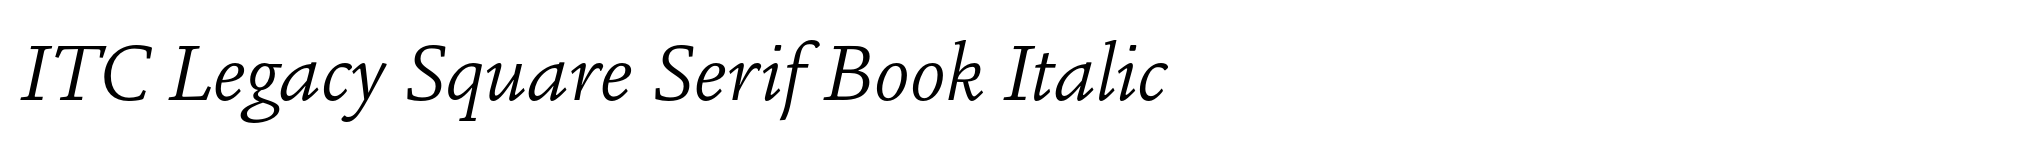 ITC Legacy Square Serif Book Italic image